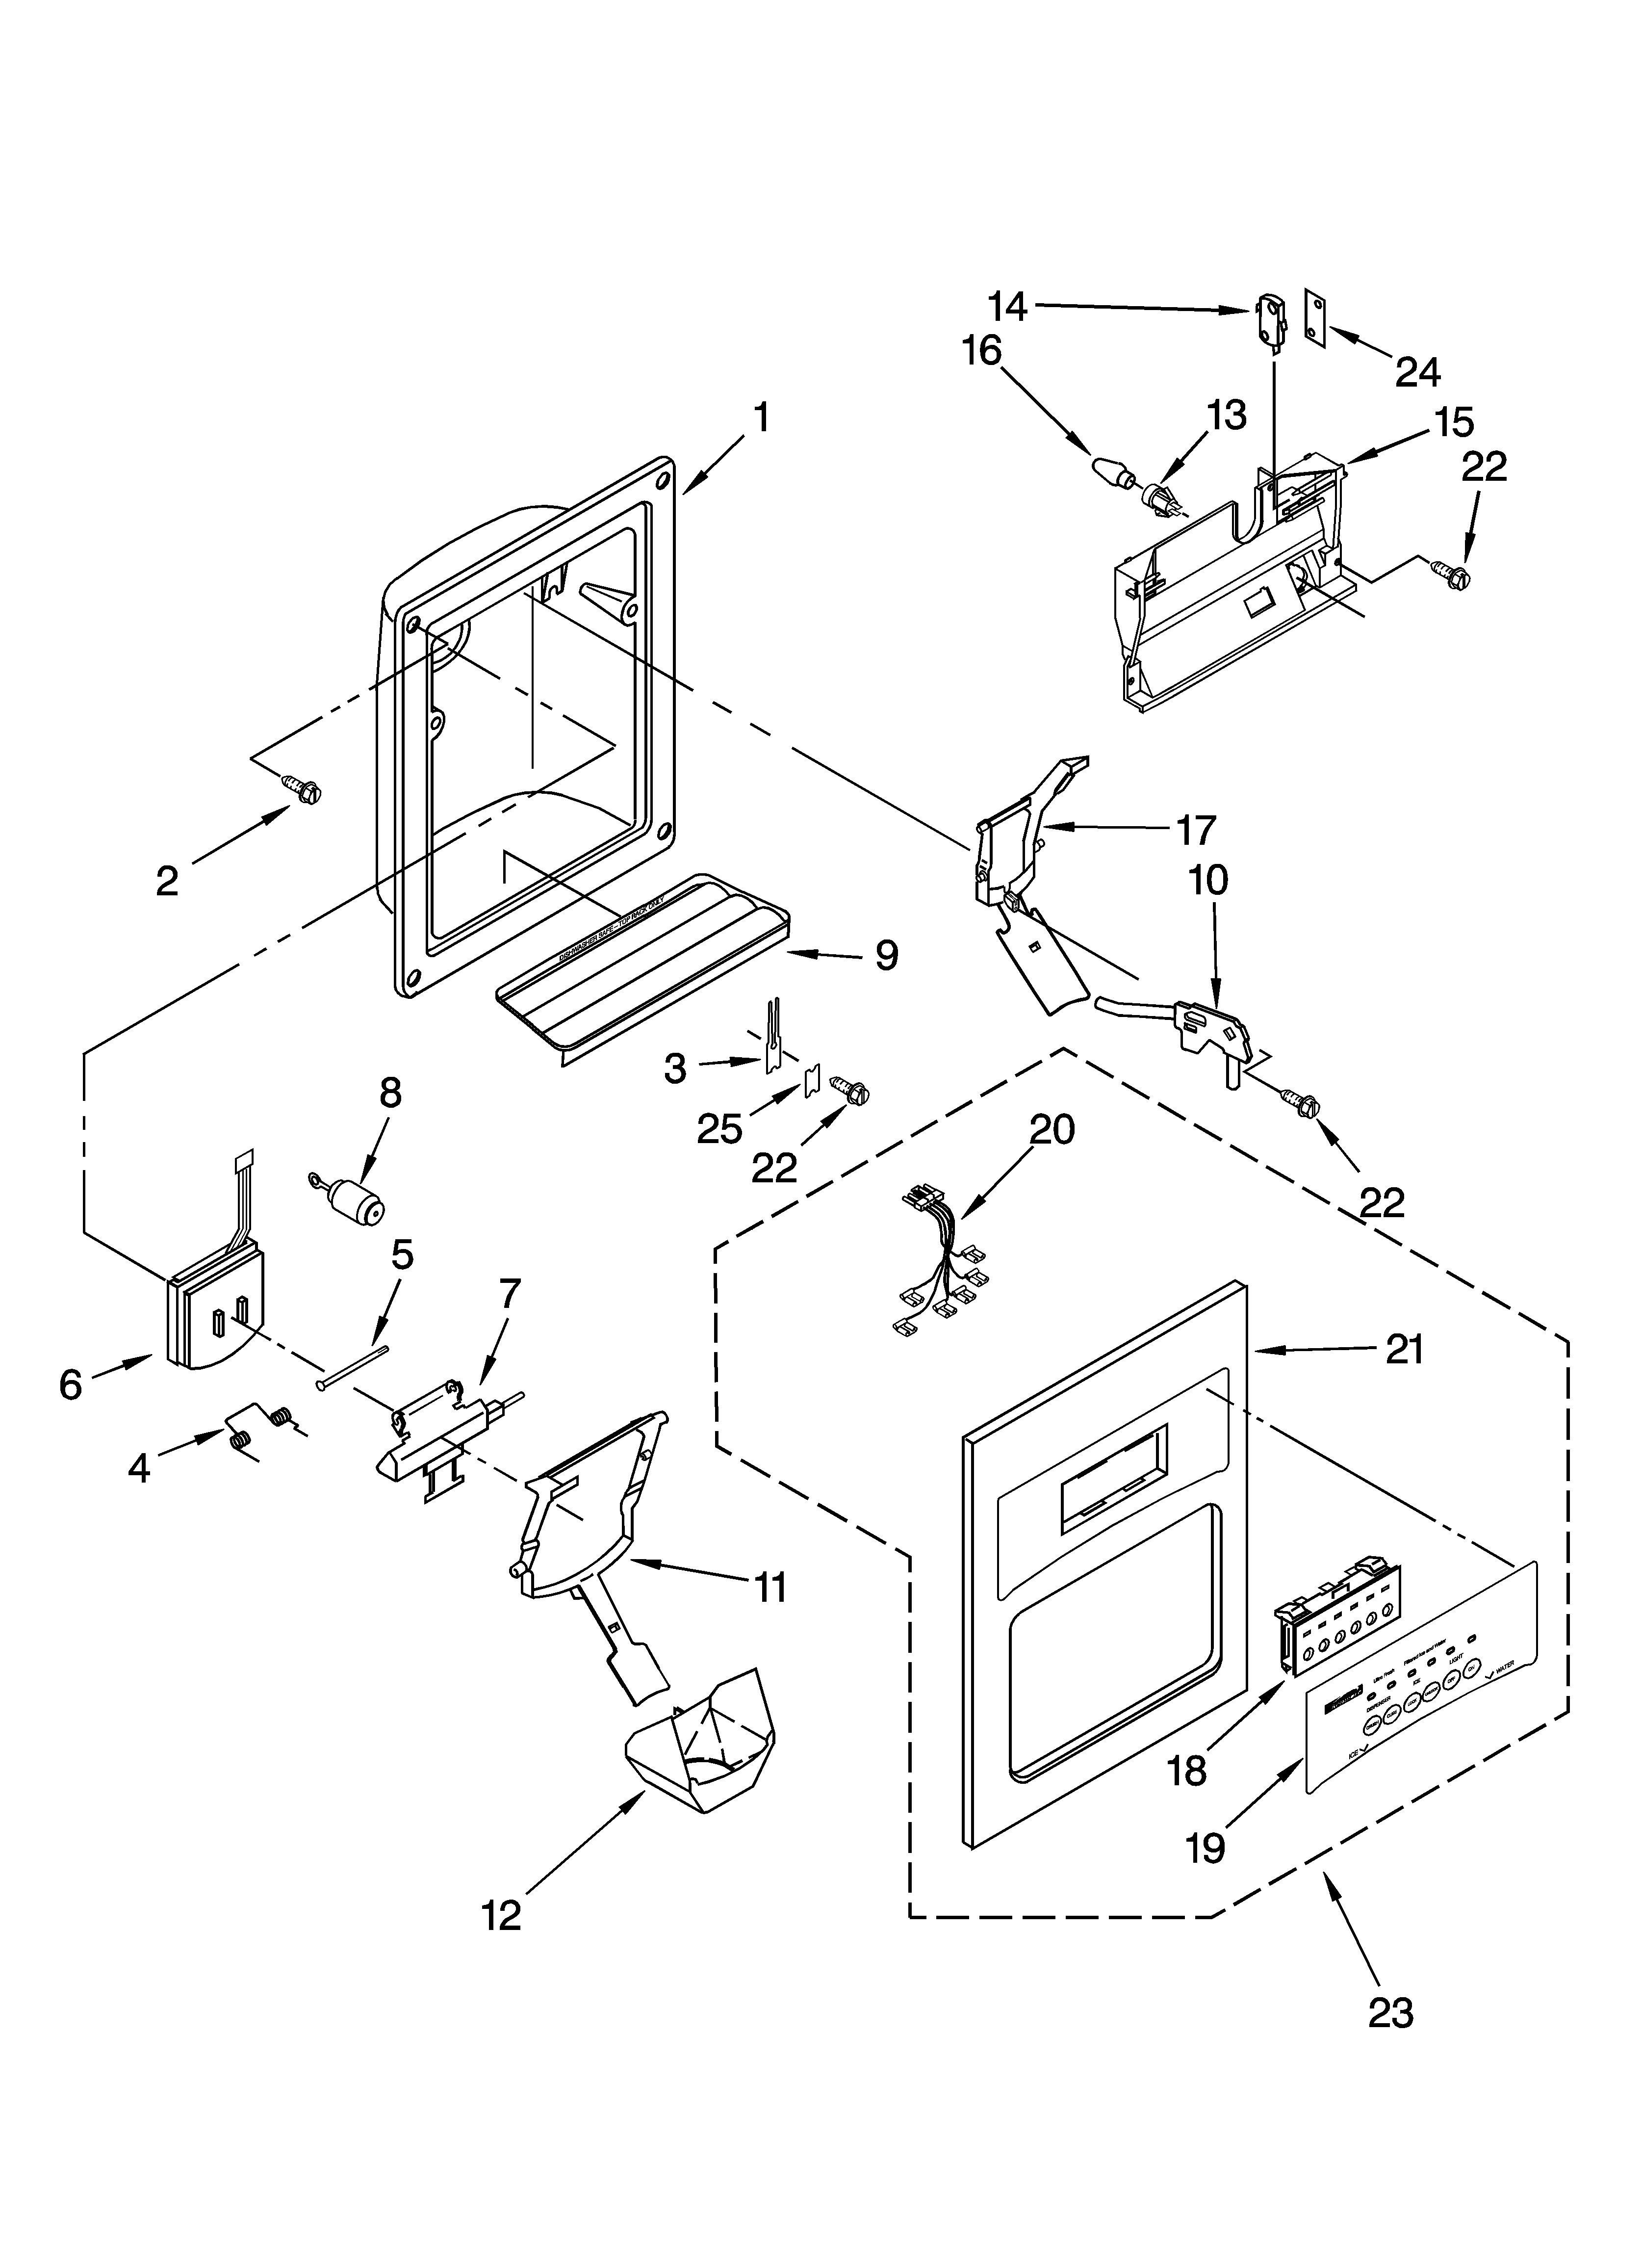 Parts Diagram For Kitchenaid Refrigerator